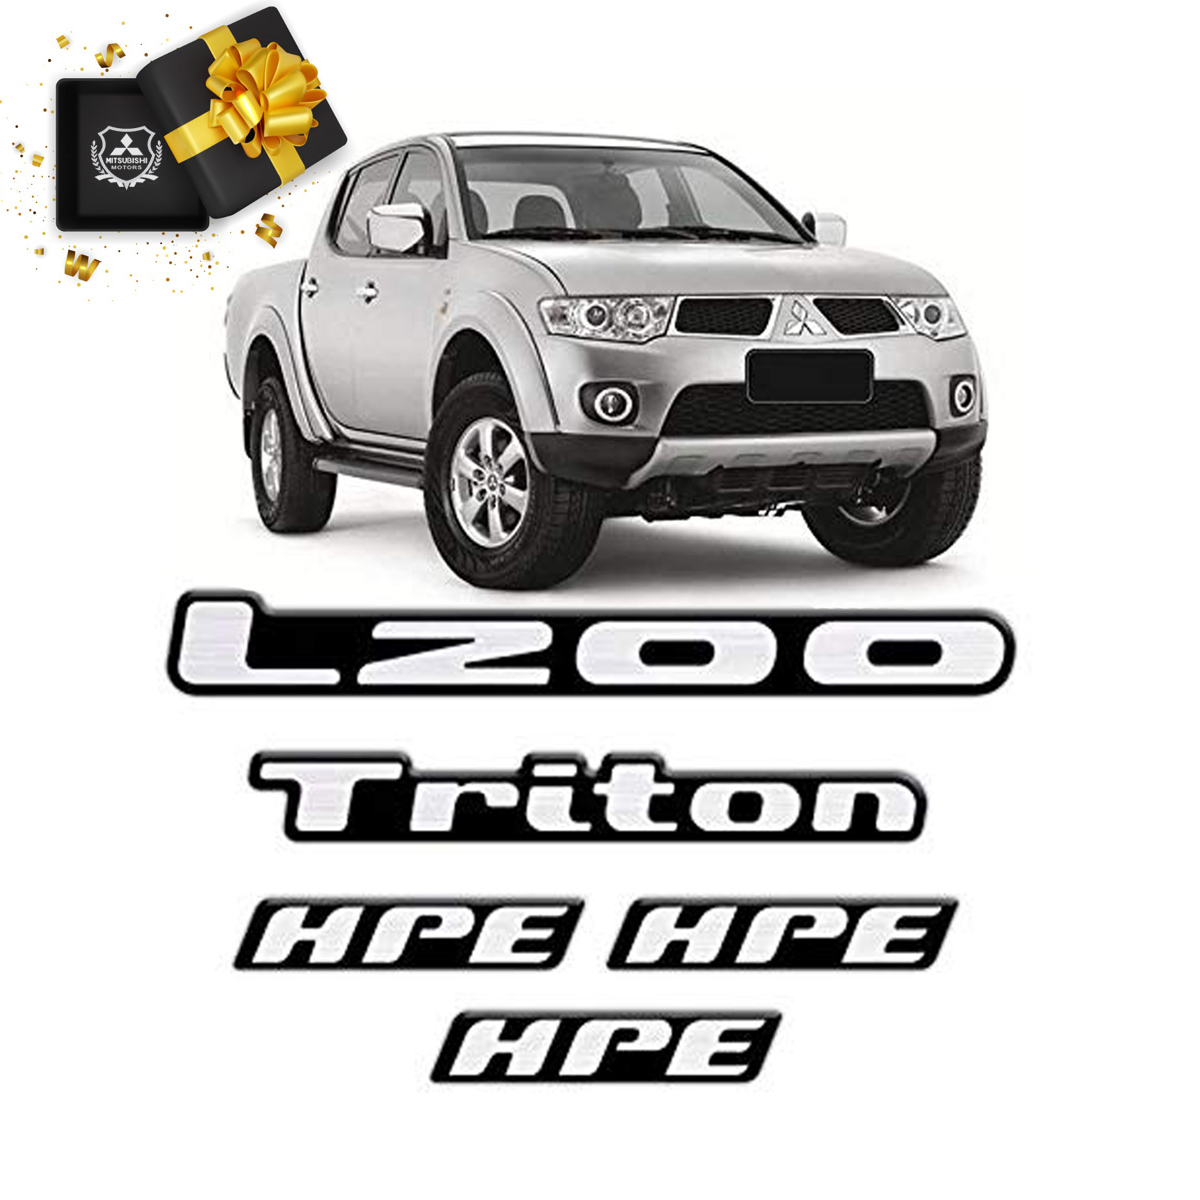 Kit Adesivos Emblema L200 Triton Hpe V6 Flex 2010 Resinados